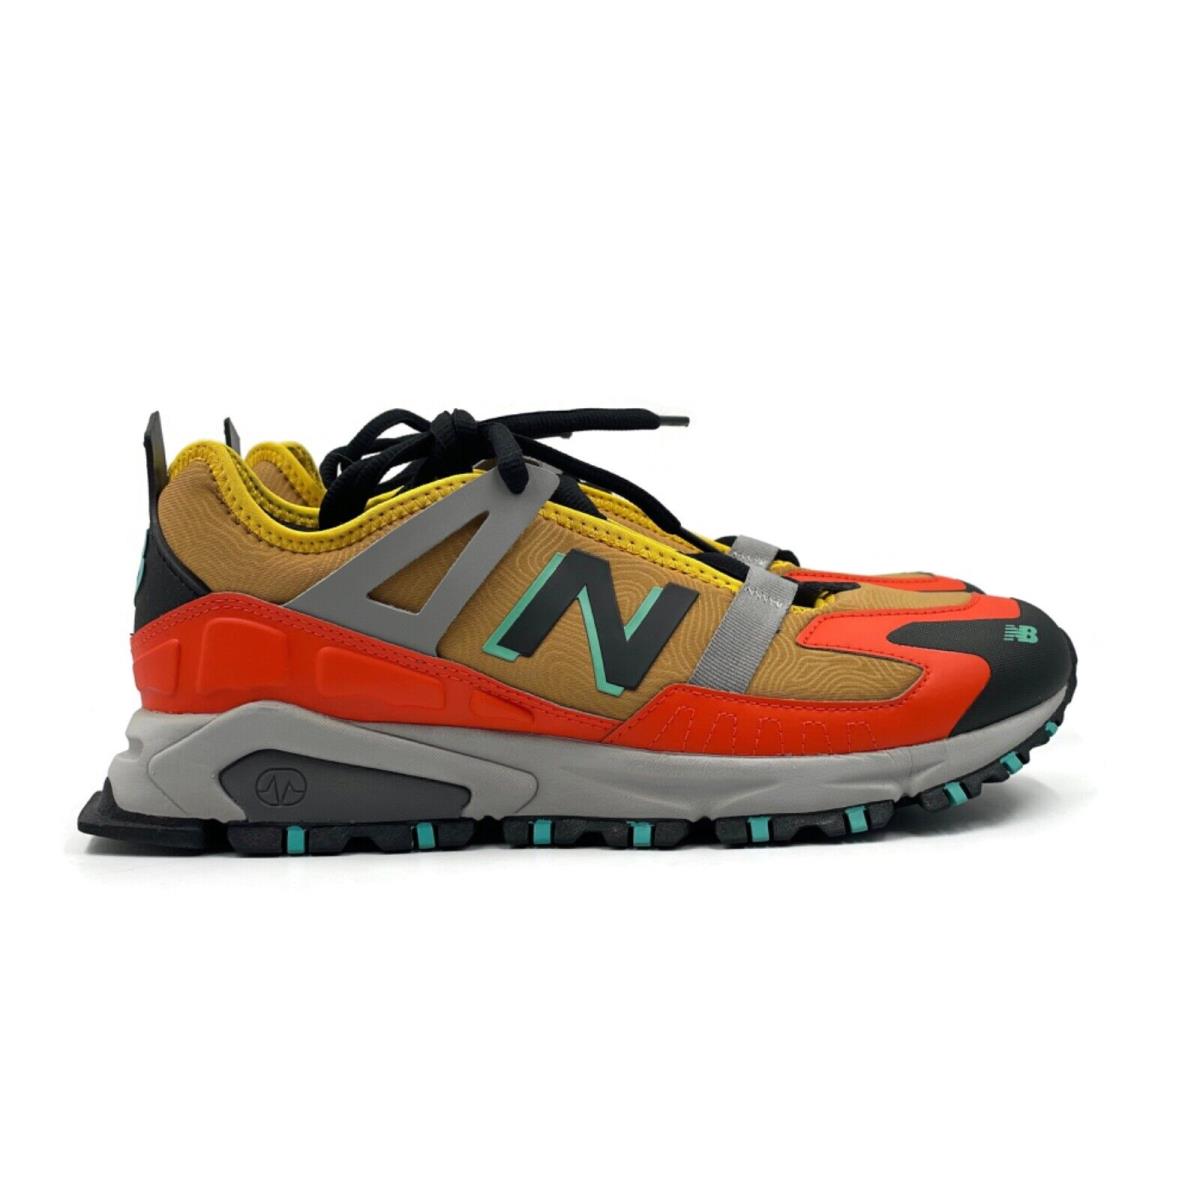 New Balance X-racer Men Casual Trail Running Shoe Orange Black Trainer Sneaker